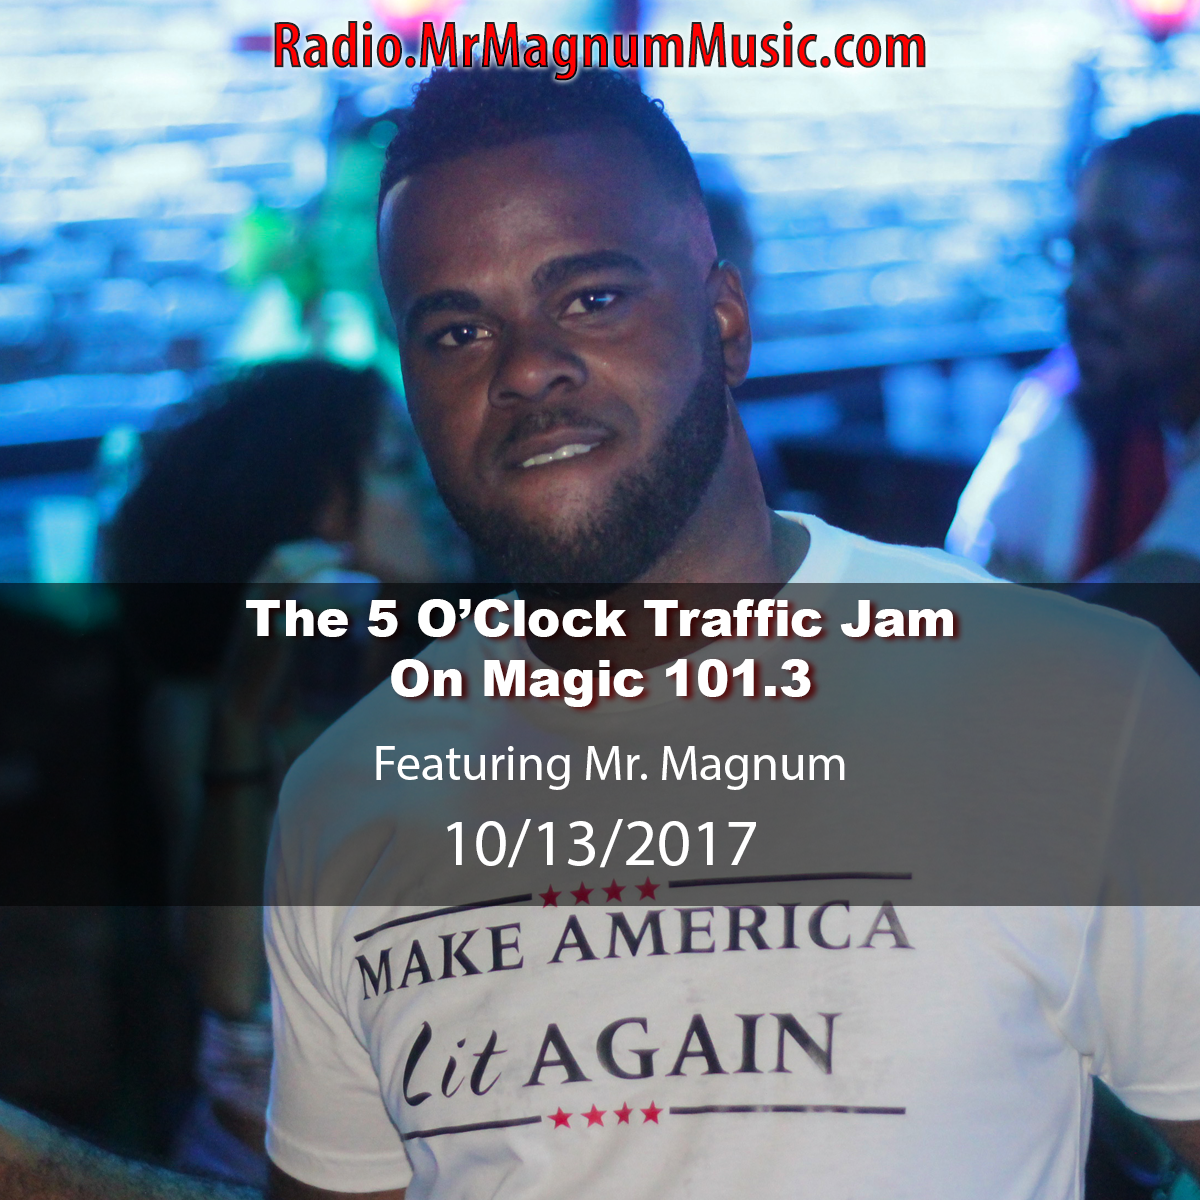 The 5 O'Clock Traffic Jam 20171013 featuring Gainesville's #1 DJ, Mr. Magnum on Magic 101.3